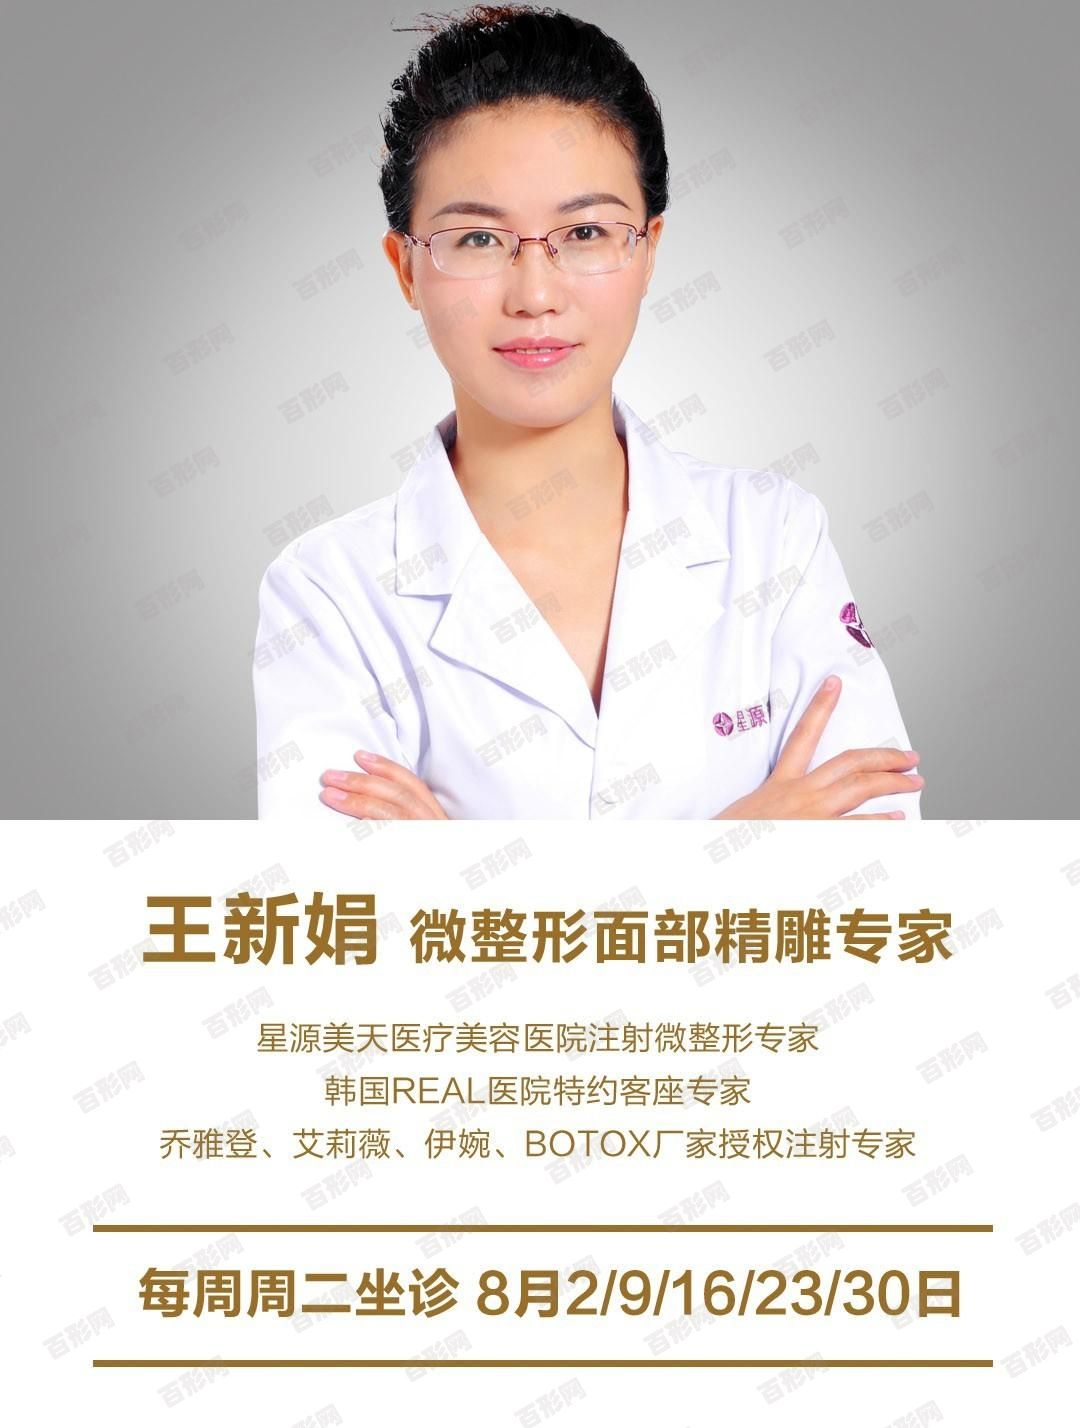 北京隆胸yestaryemat科技生物科技生物科技生物科技